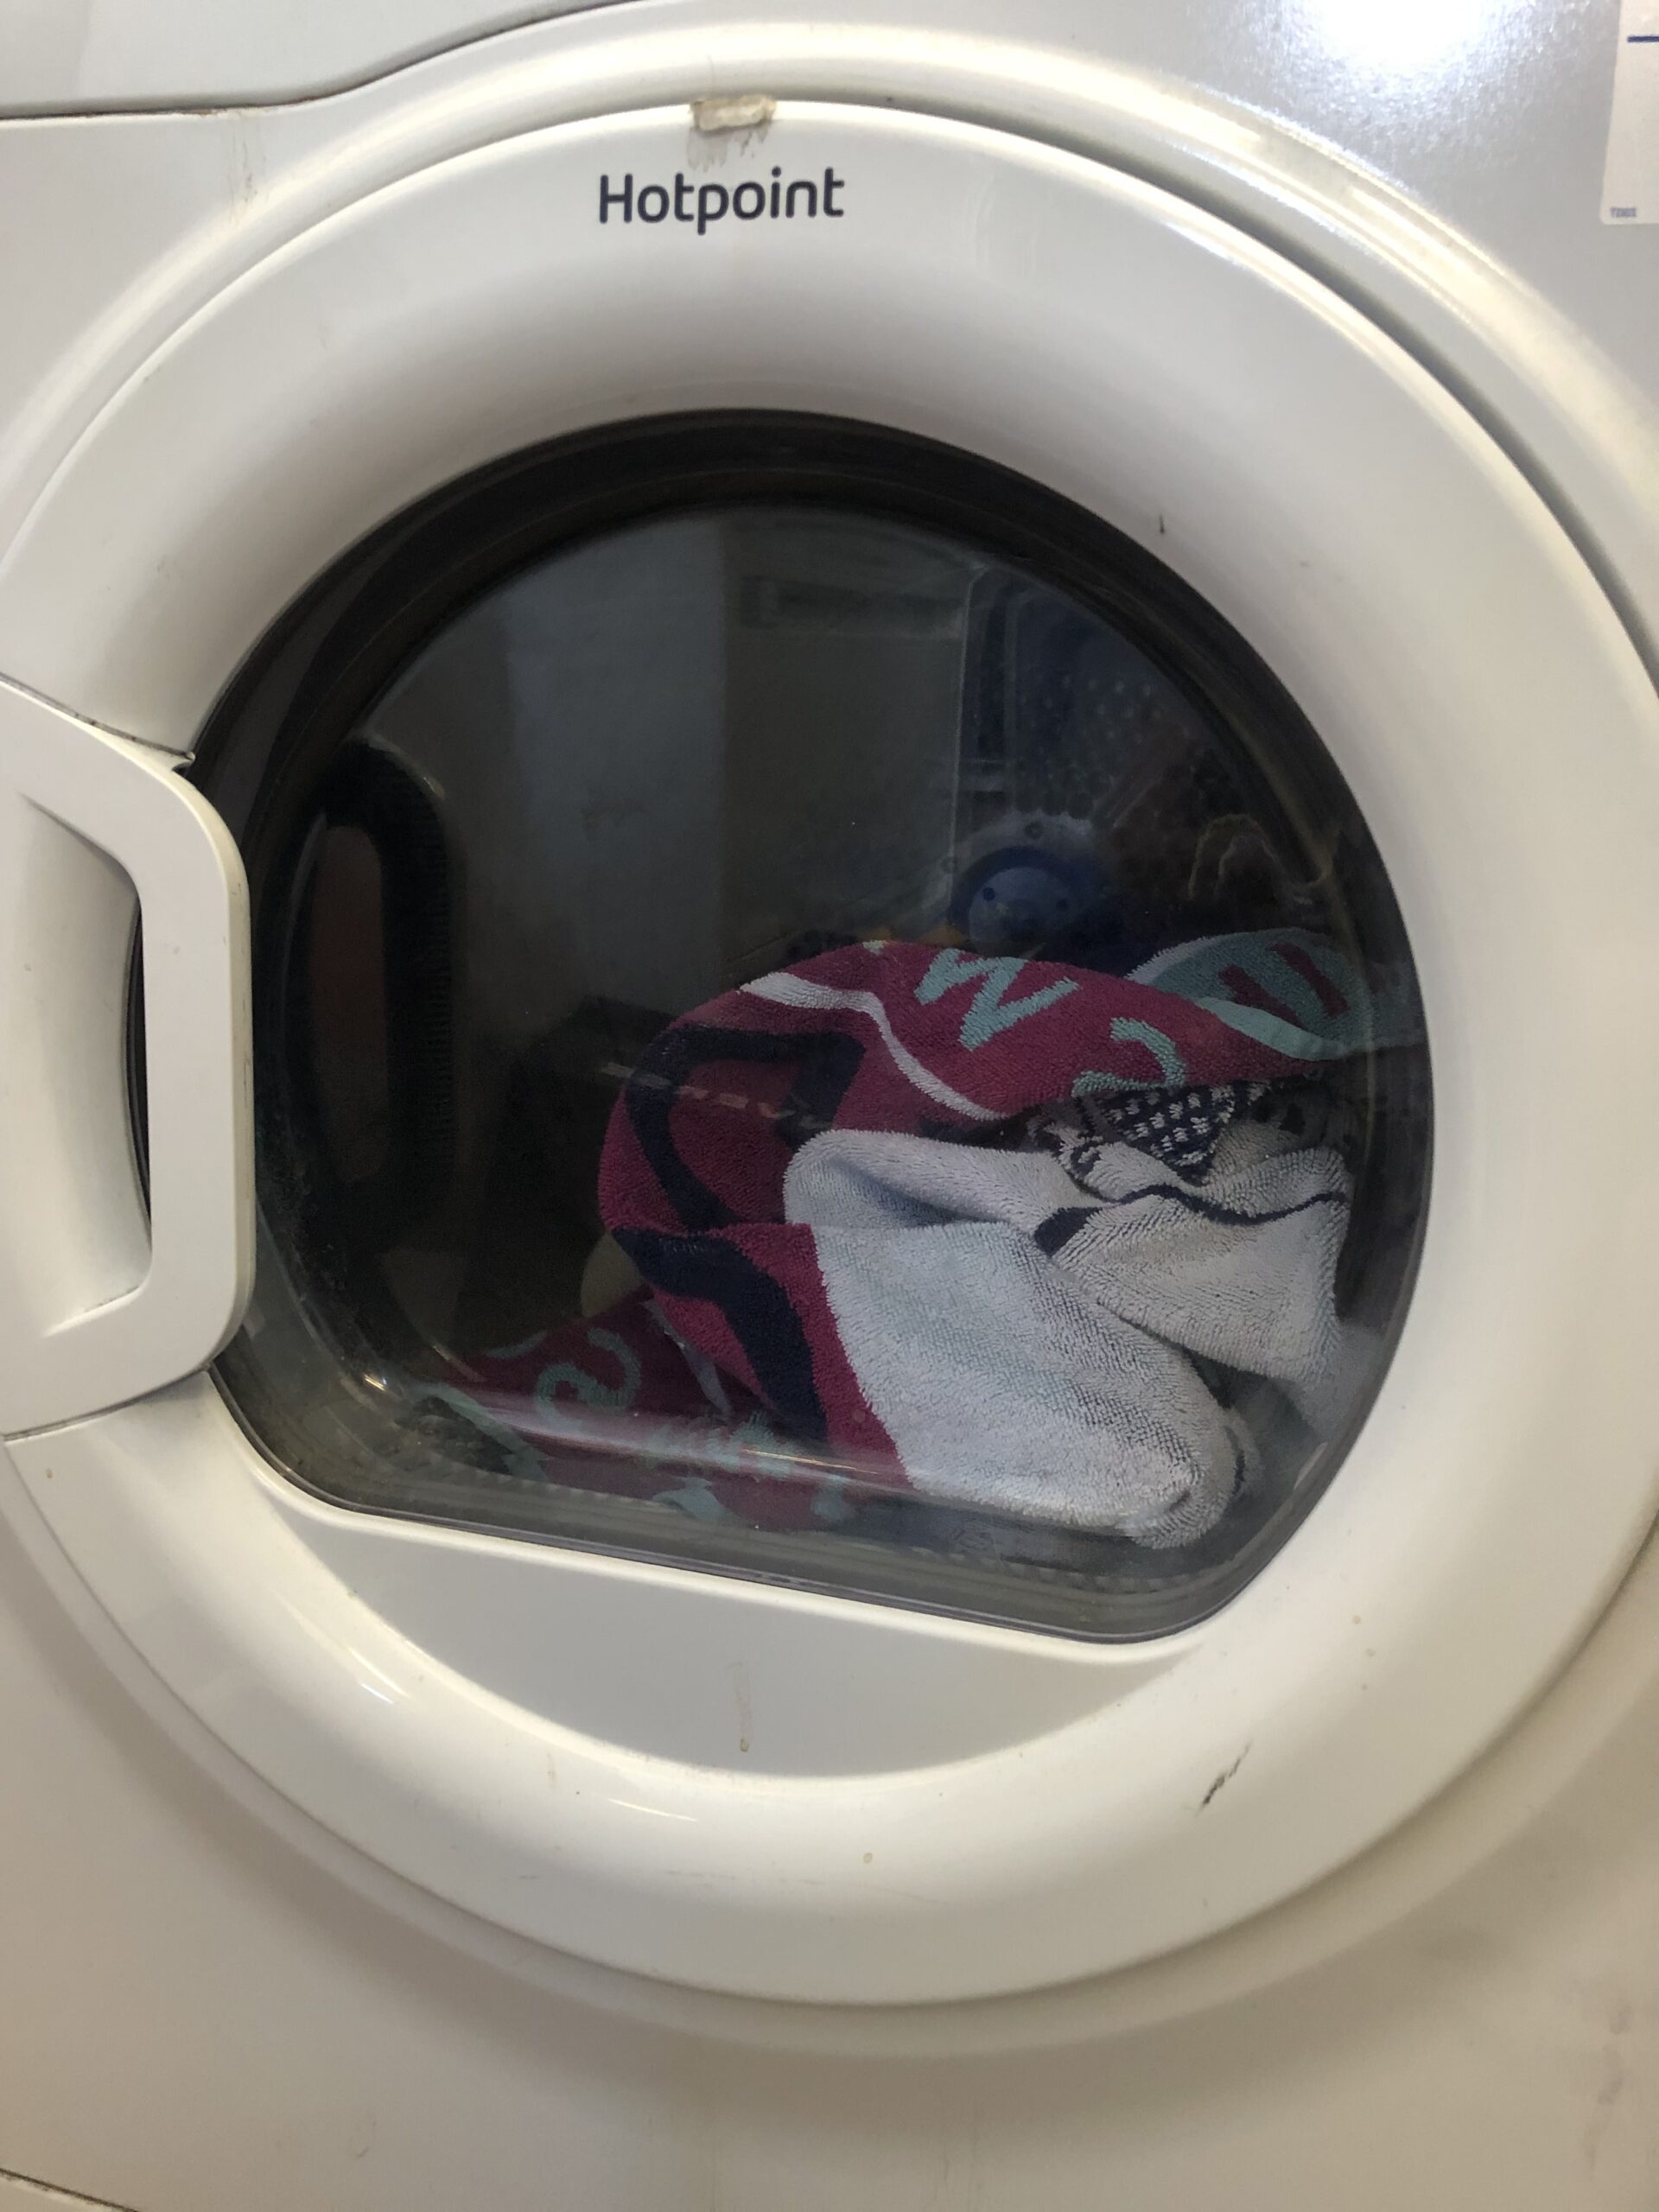 A washing machine containing laundry